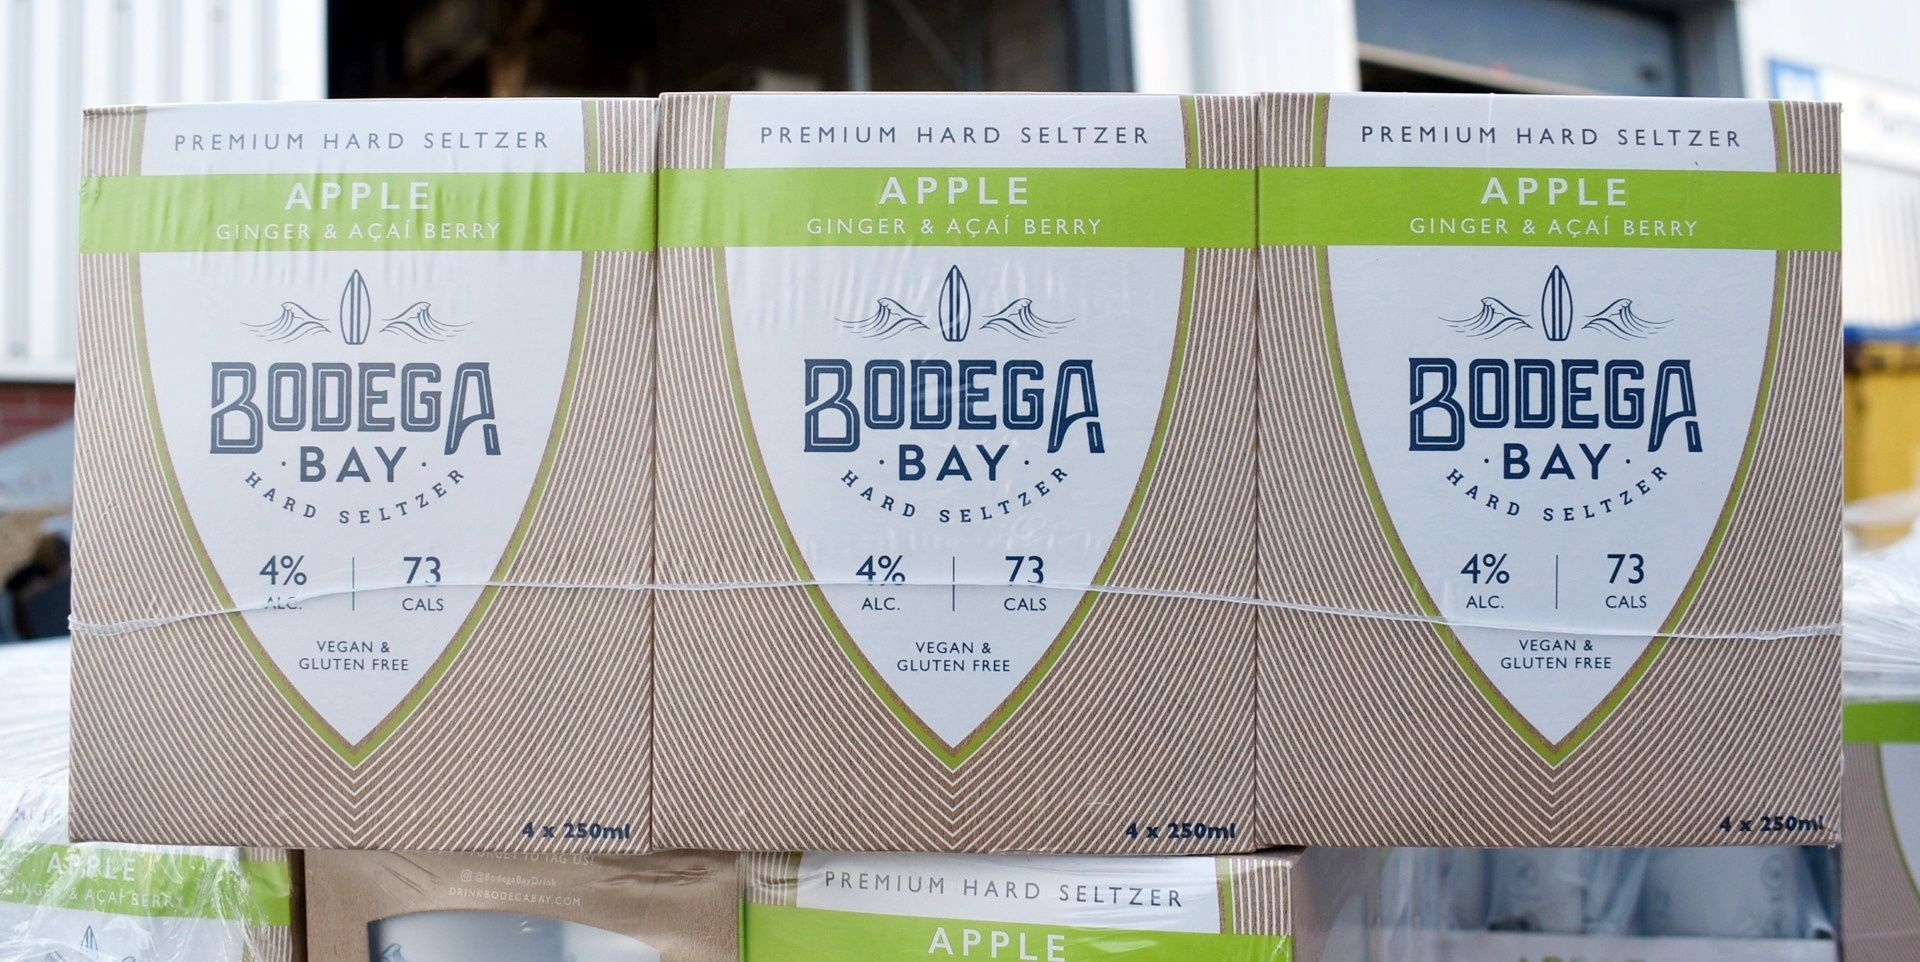 24 x Bodega Bay Hard Seltzer 250ml Alcoholic Sparkling Water Drinks - Apple Ginger & Acai Berry - Image 11 of 11